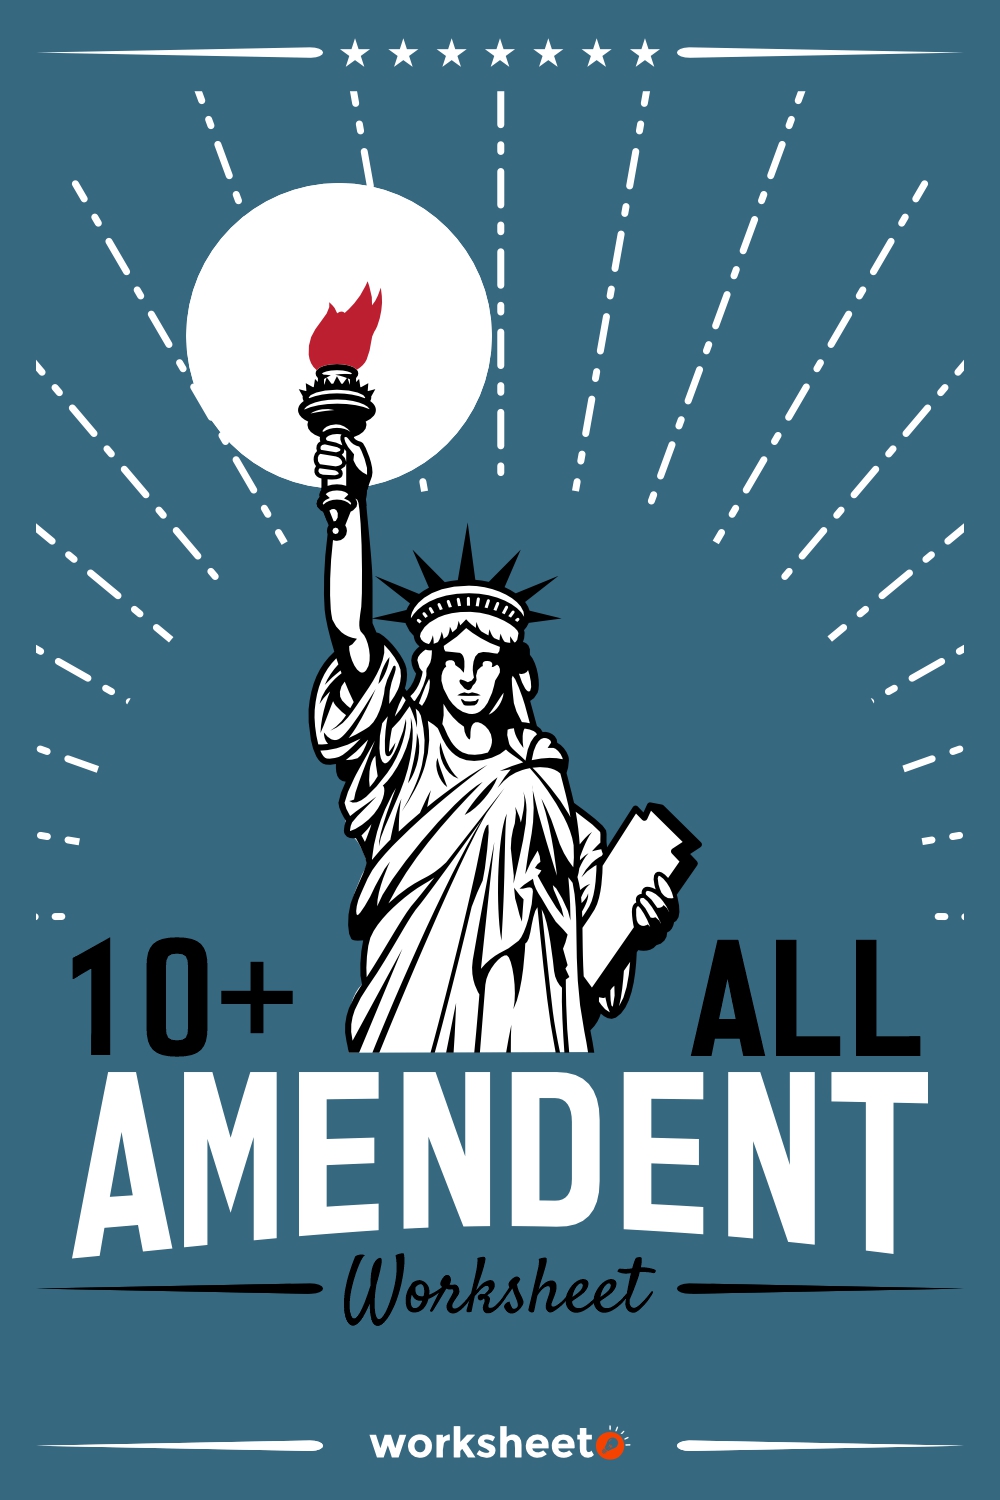 All Amendment Worksheet